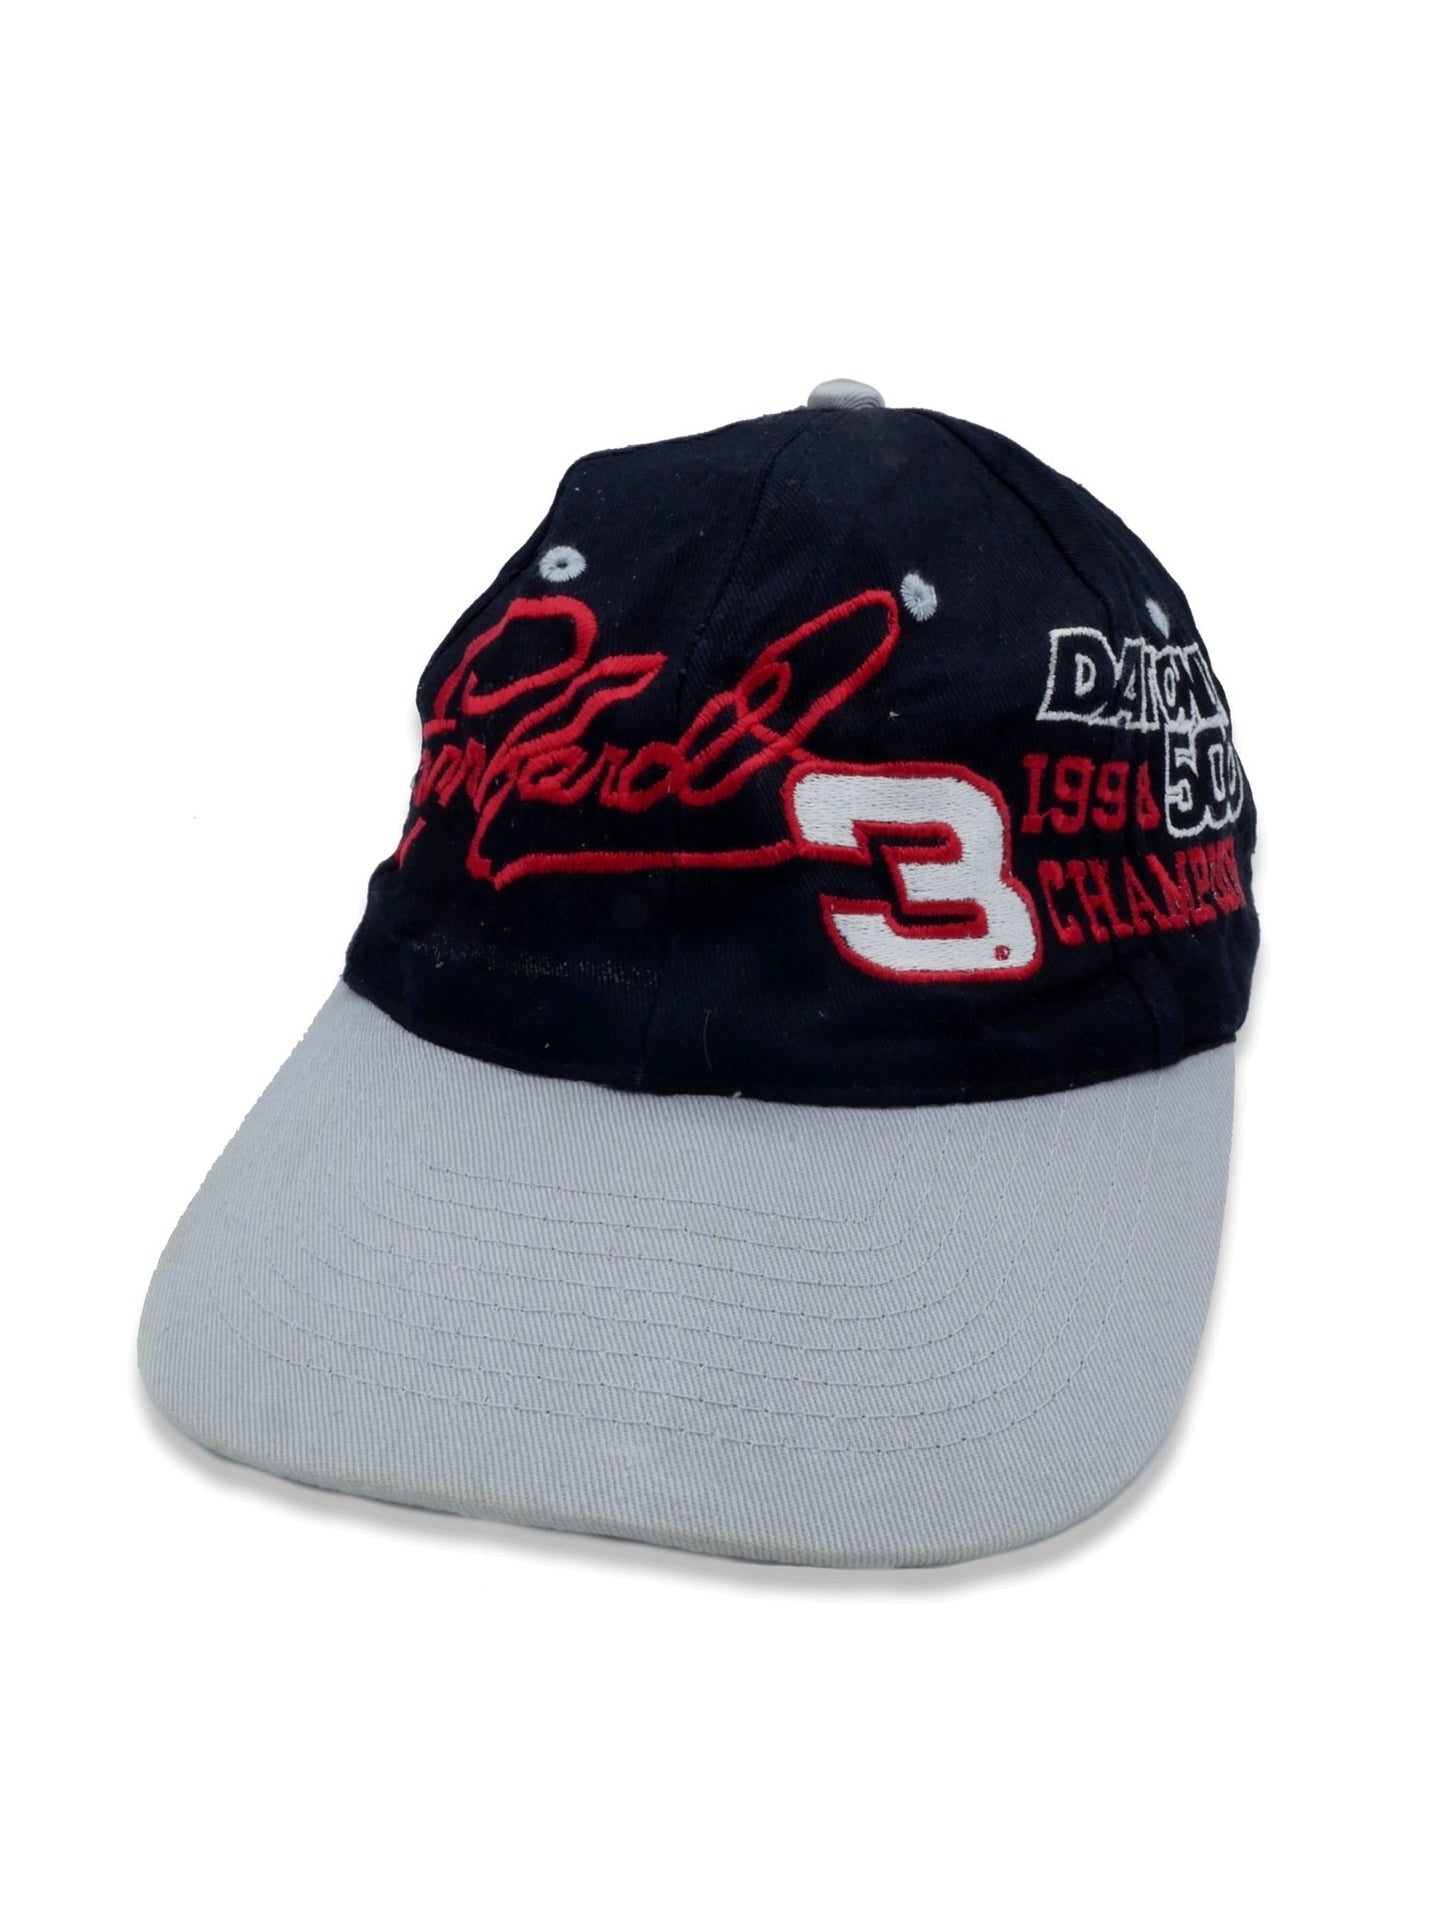 Nascar Dale Earnhard Daytona 500 Cap - Peeces